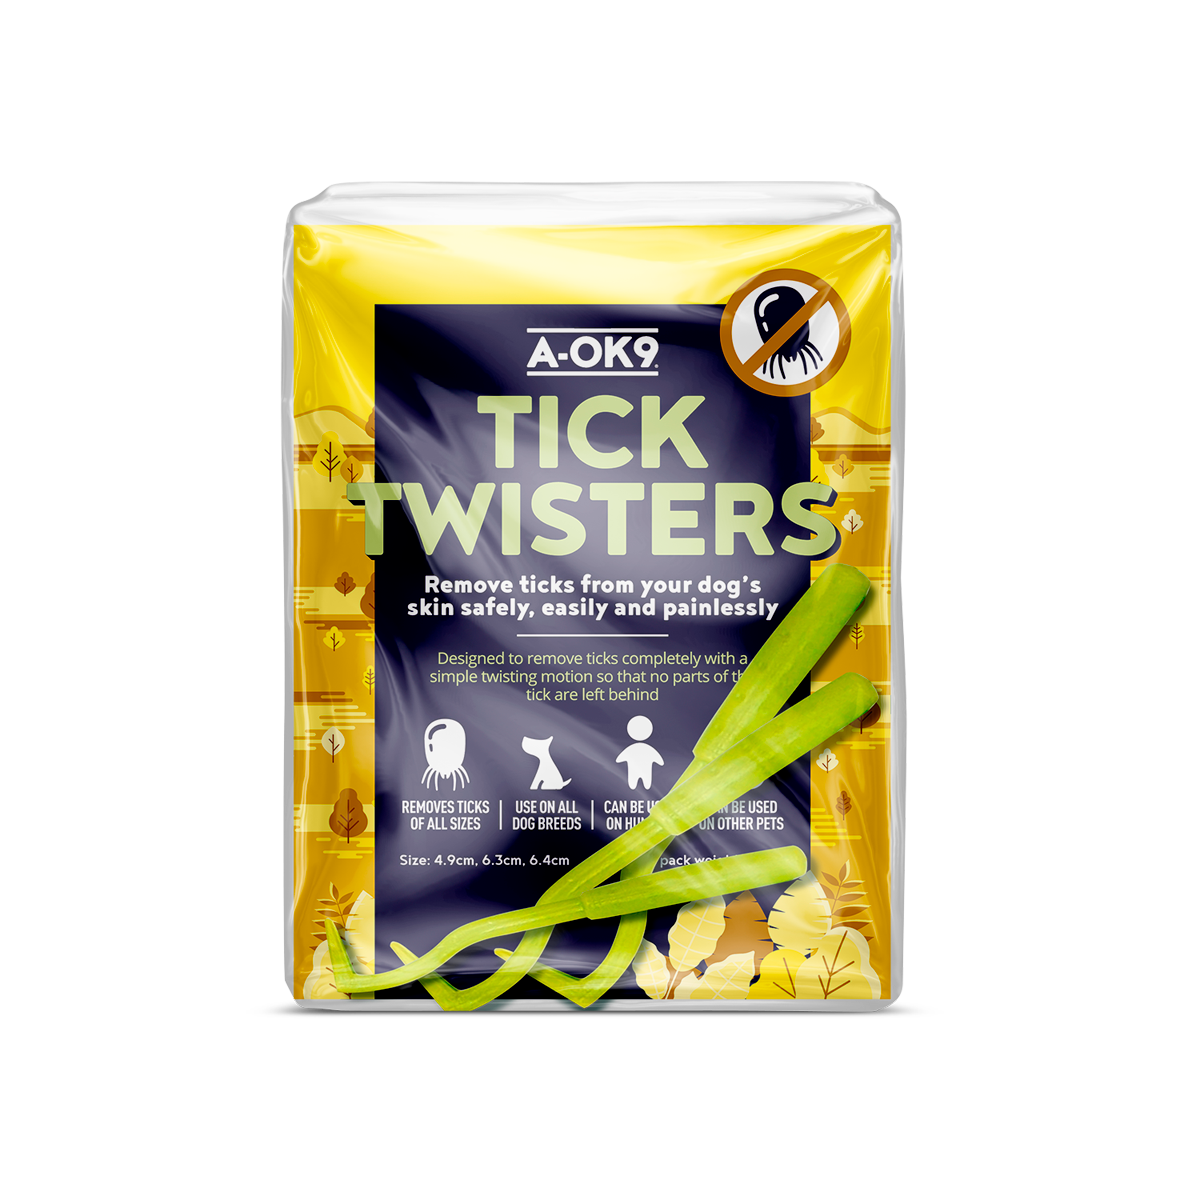 A-OK9 Tick Twister Pack